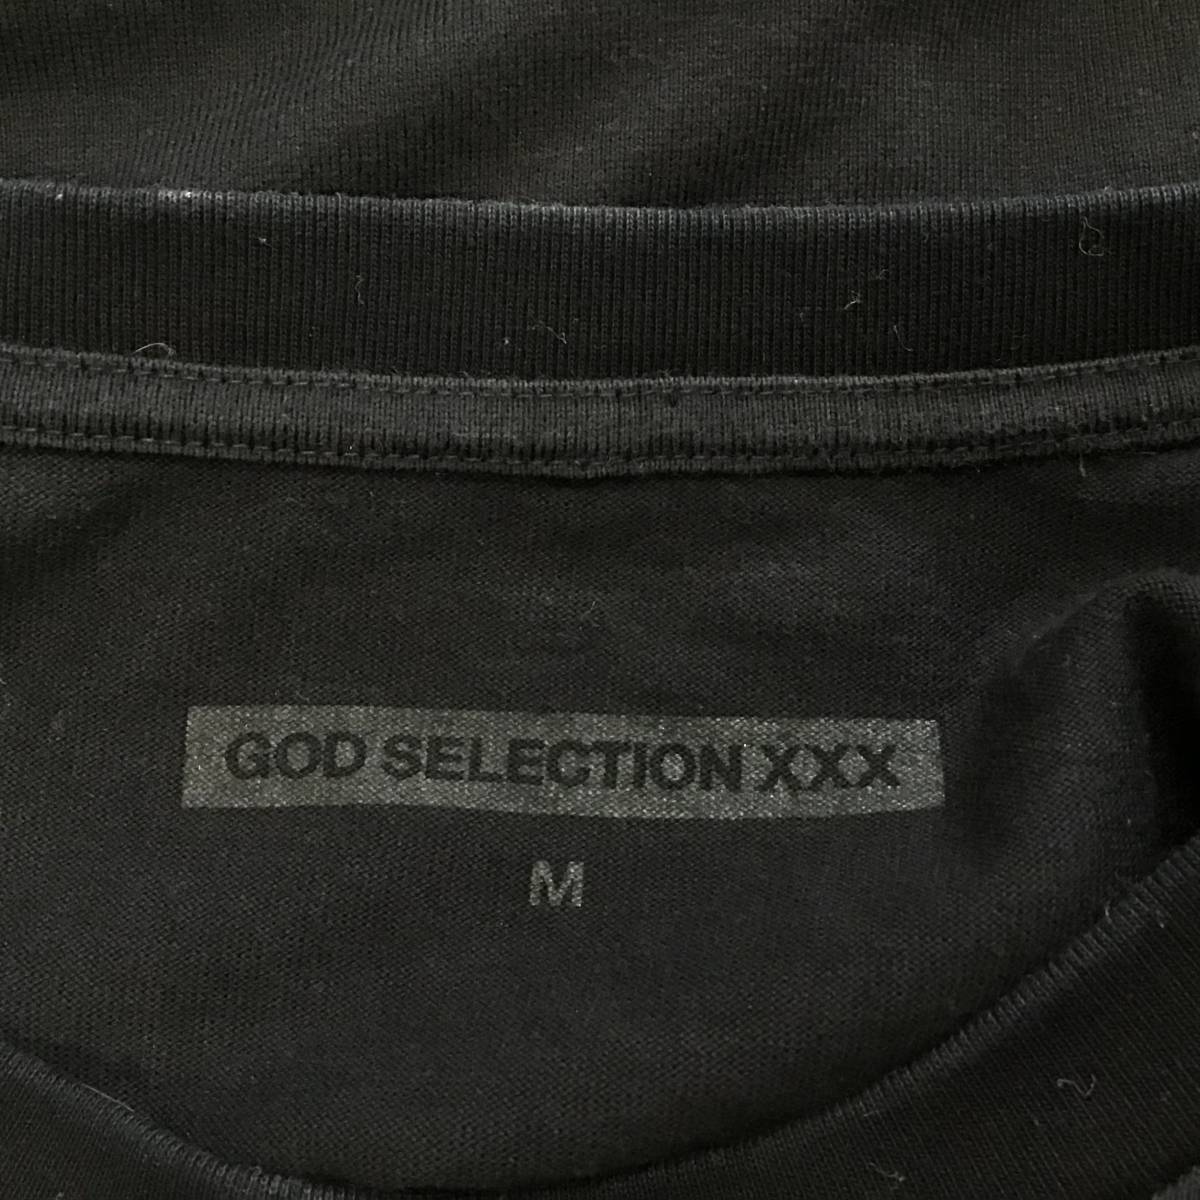 GOD SELECTION XXX ゴッドセレクション トリプルエックス マリリンモンロー ボックスロゴ 長袖 カットソー ロンT Tシャツ M 10095200